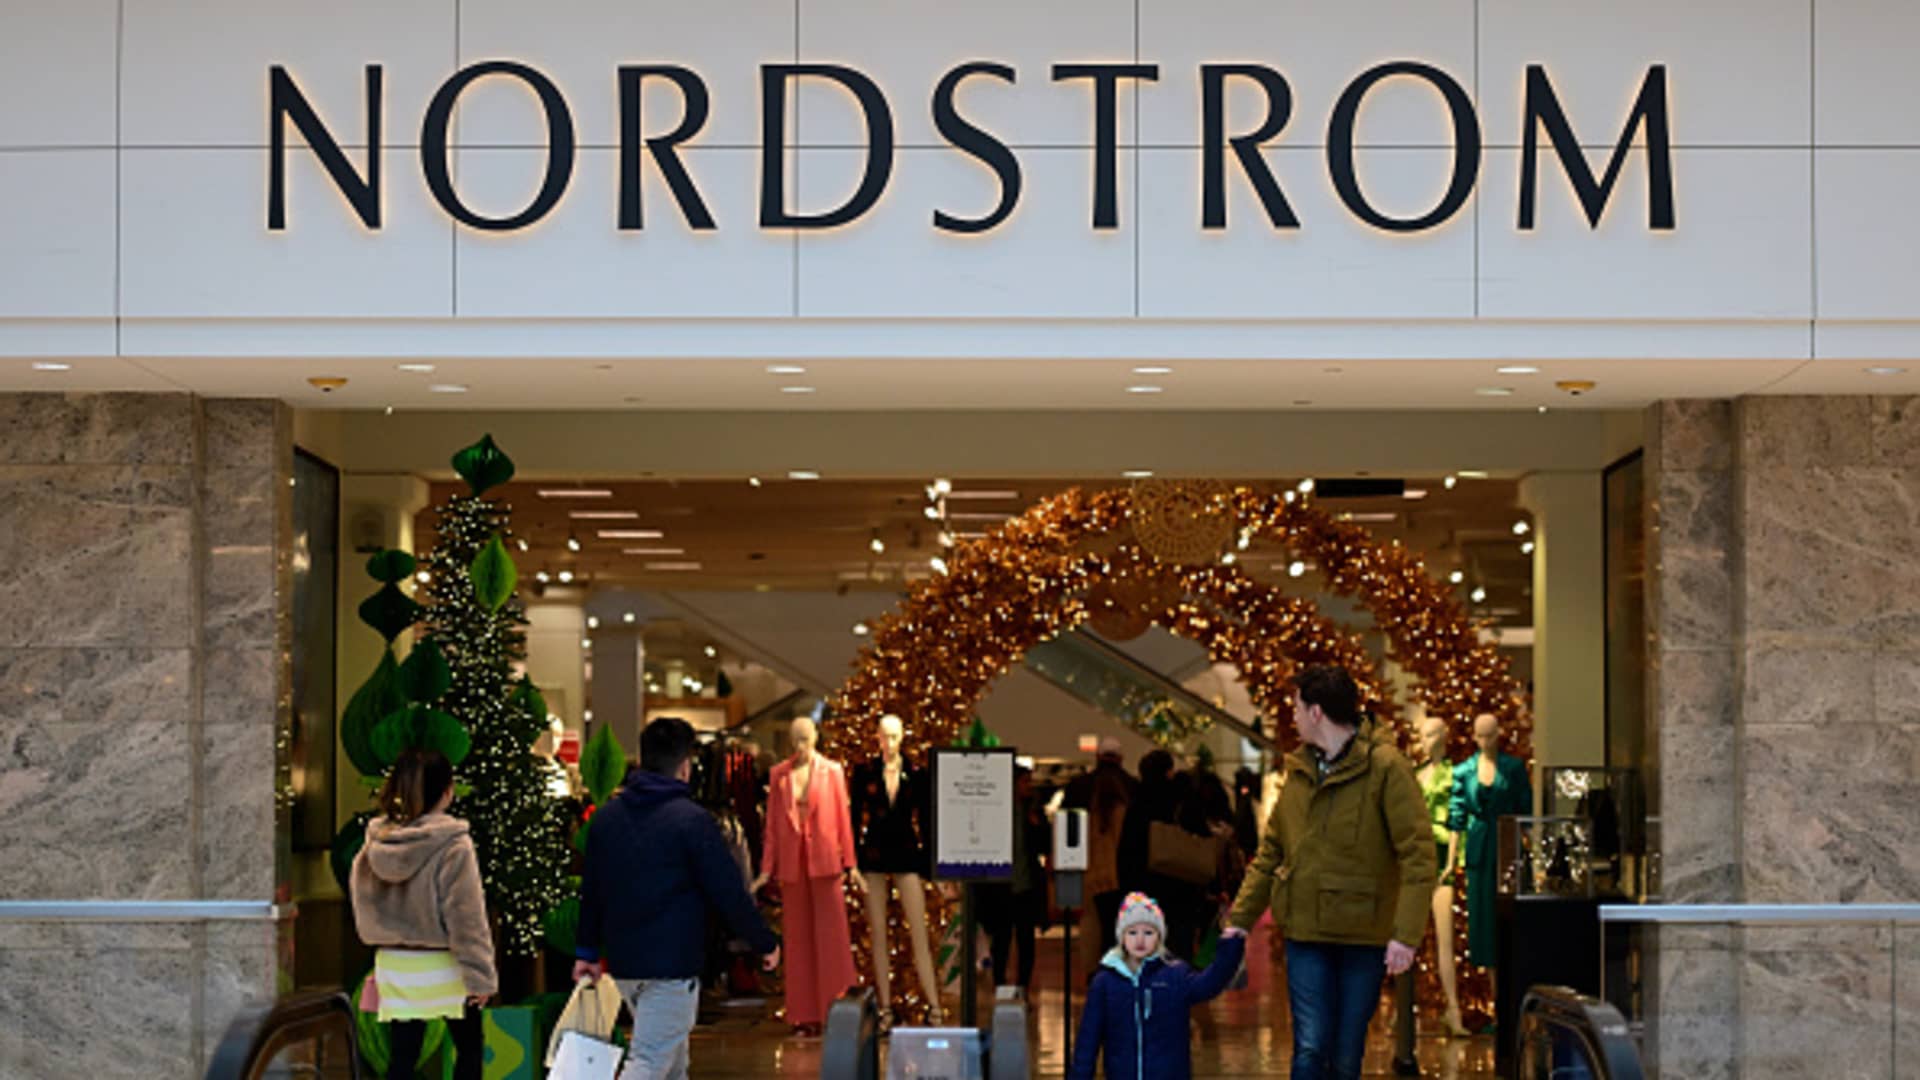 Nordstrom sales near up quick, echoing broader retail change pressures